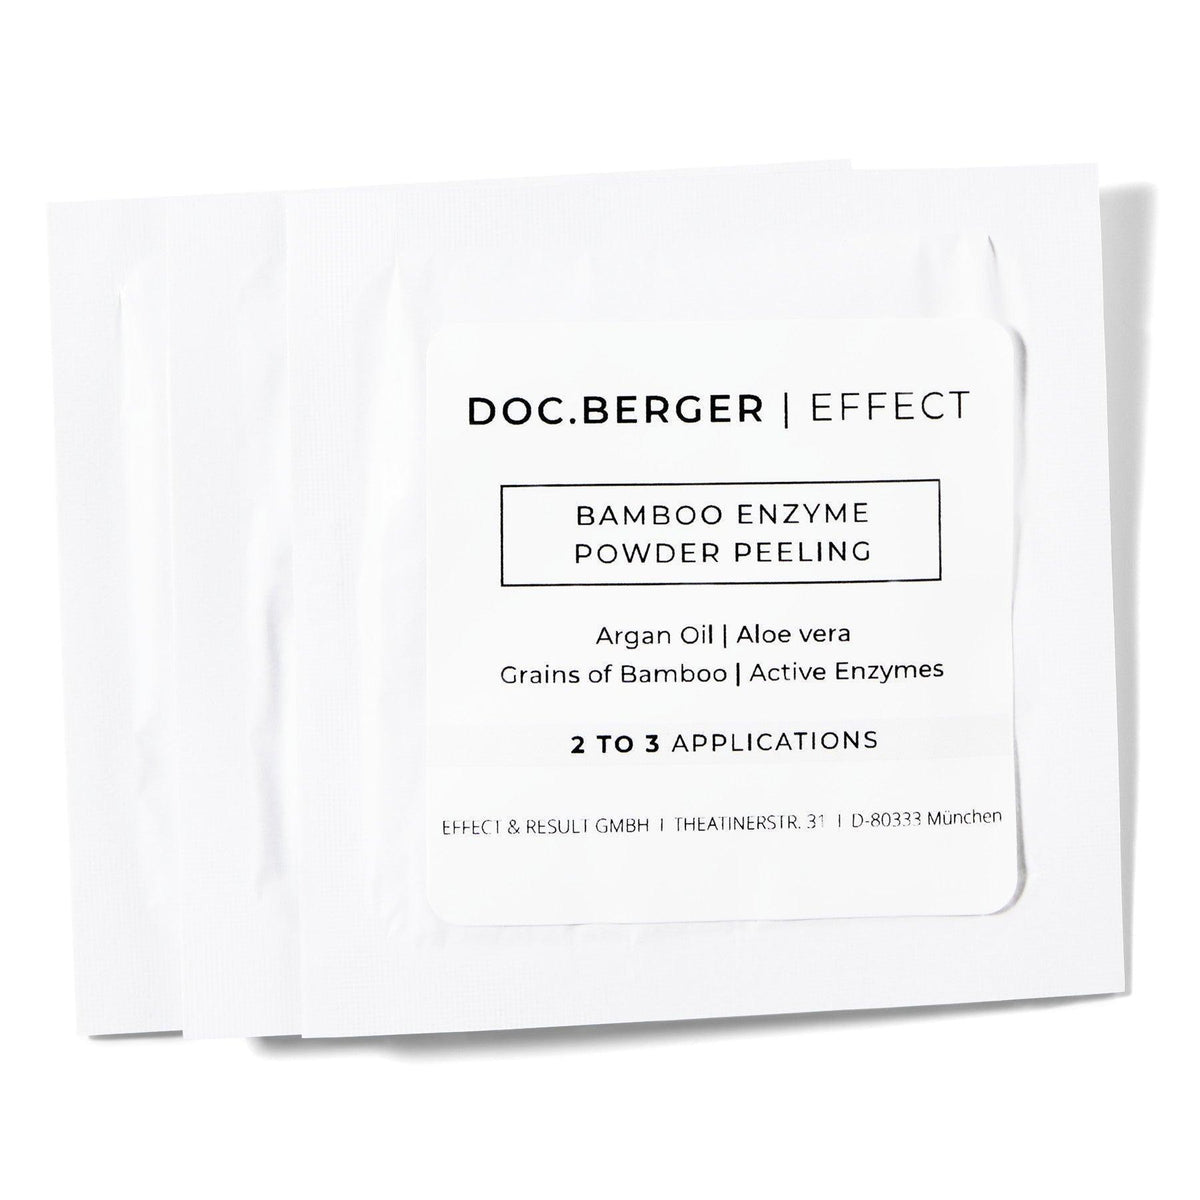 Bamboo Enzyme Powder Peeling - DOC.BERGER | EFFECT